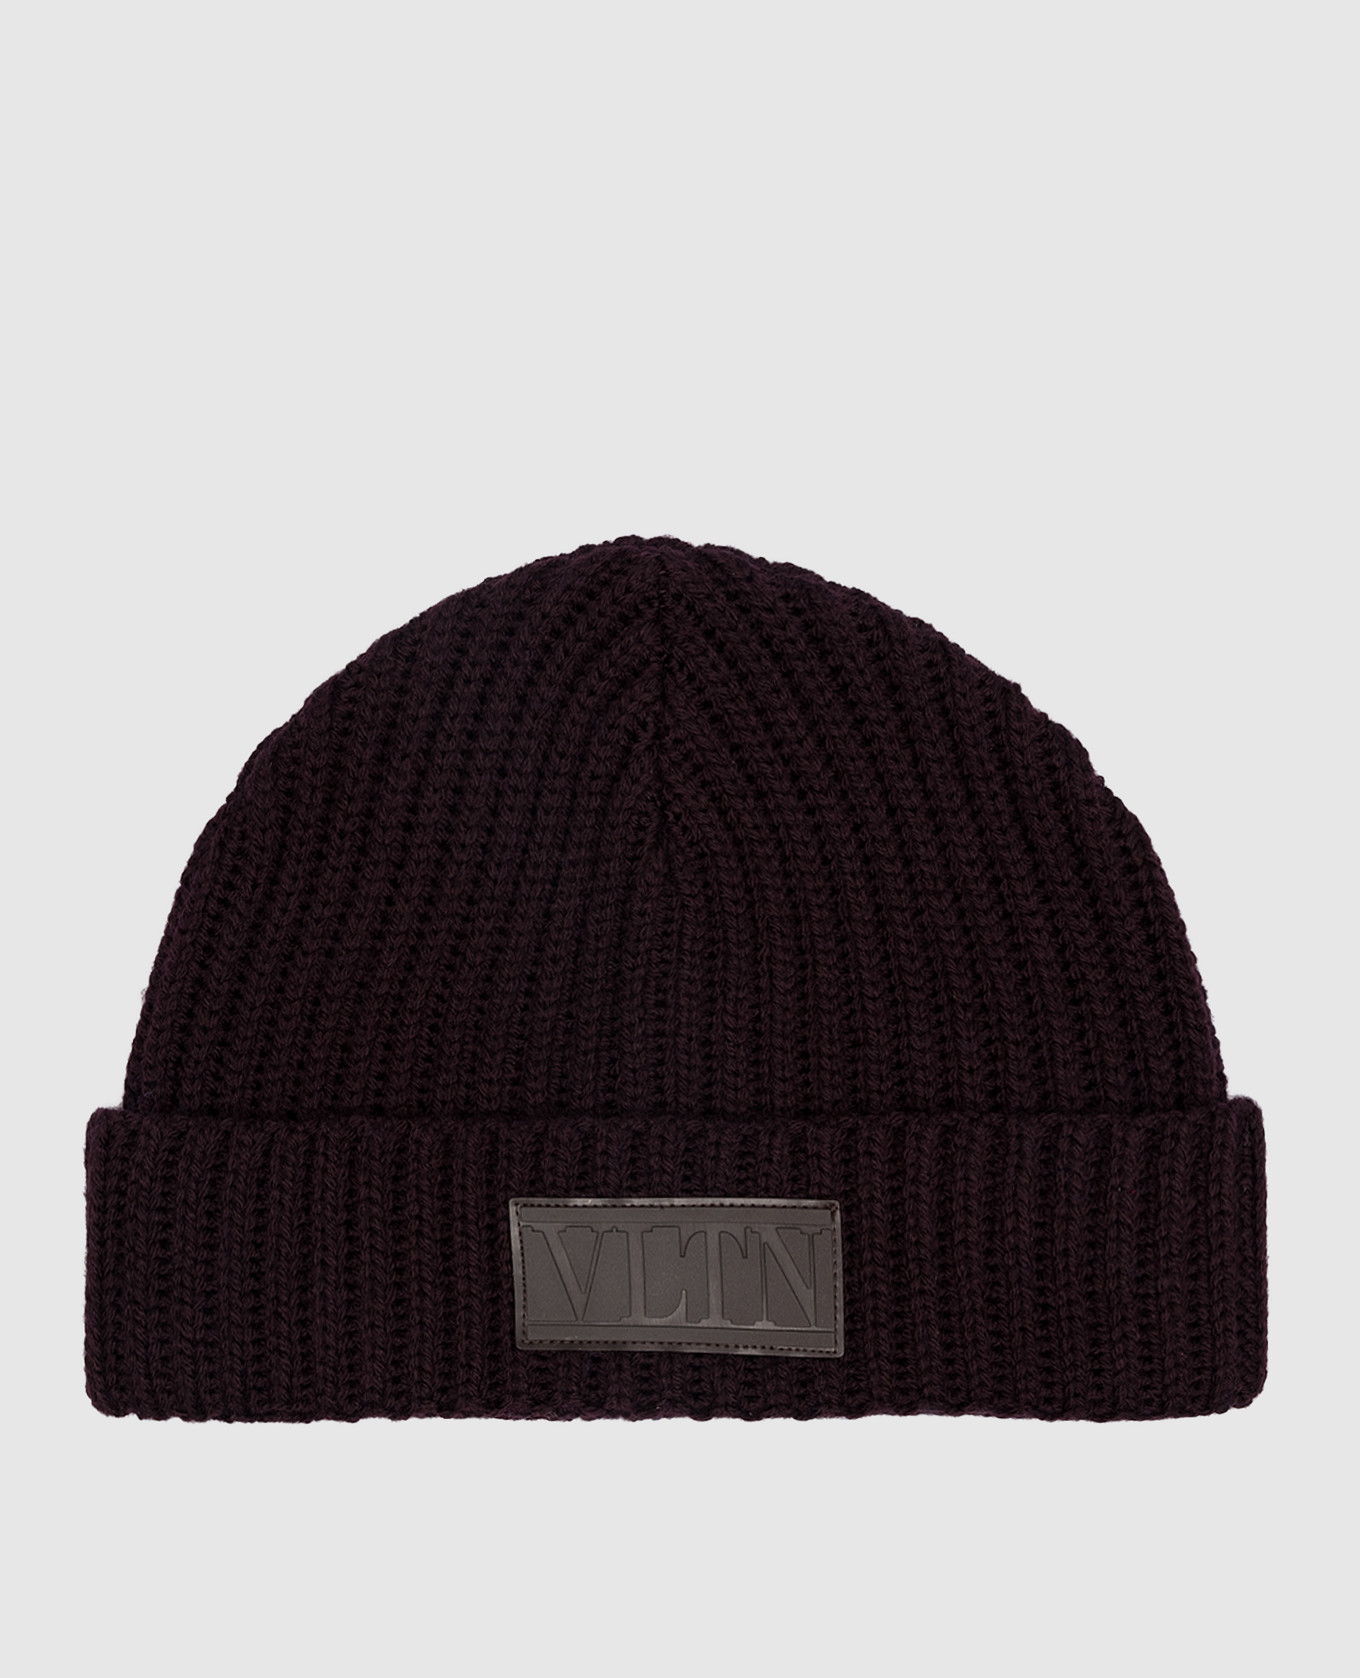 Brown wool cap with VLTN logo